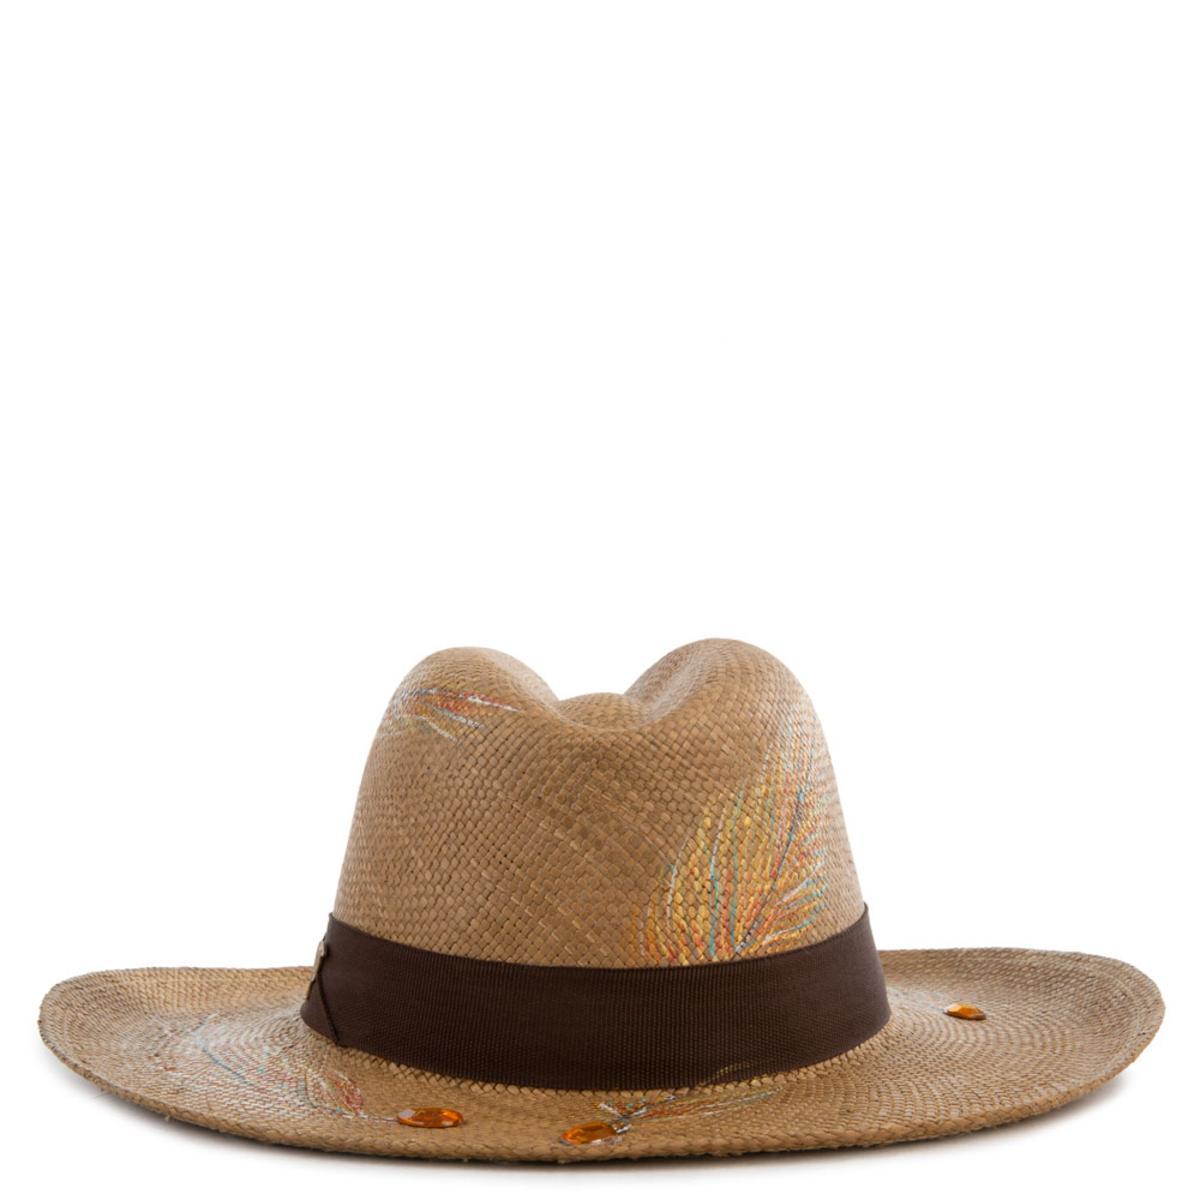 Plumas CafÃ© Panama Hat Size M